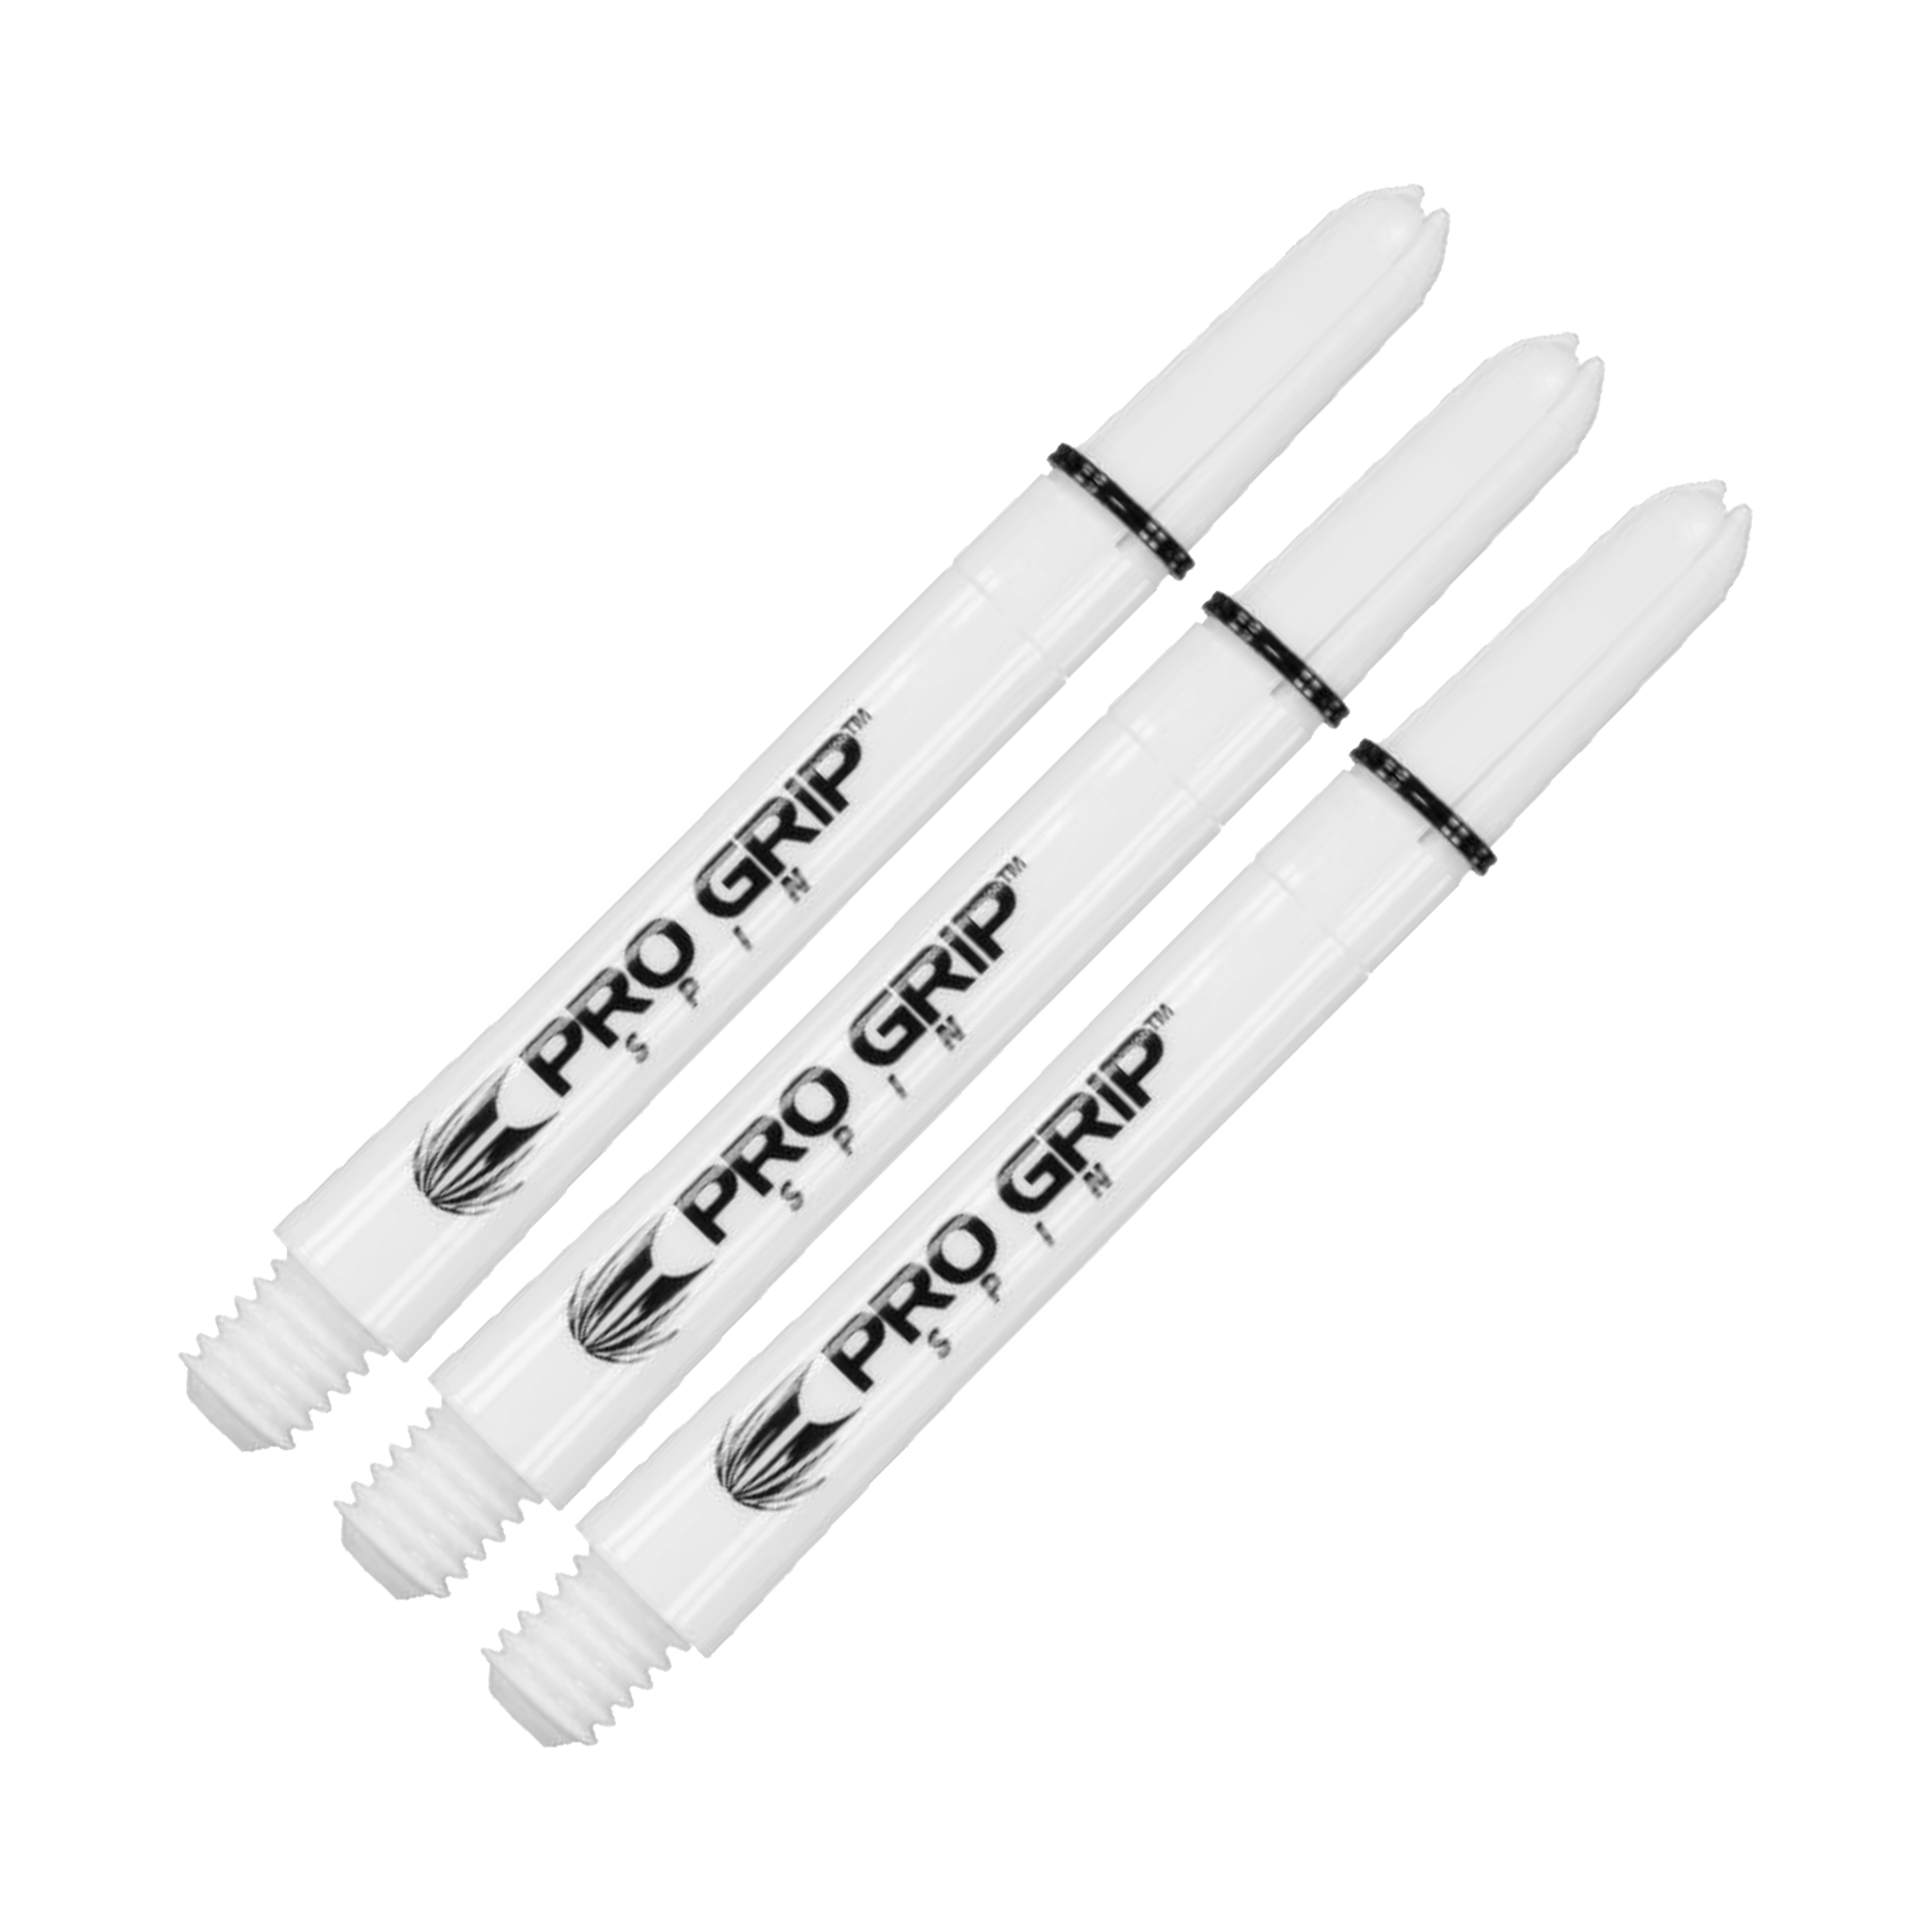 Target Pro Grip Spin - Nylon Dart Shafts White / Medium (48mm) Shafts